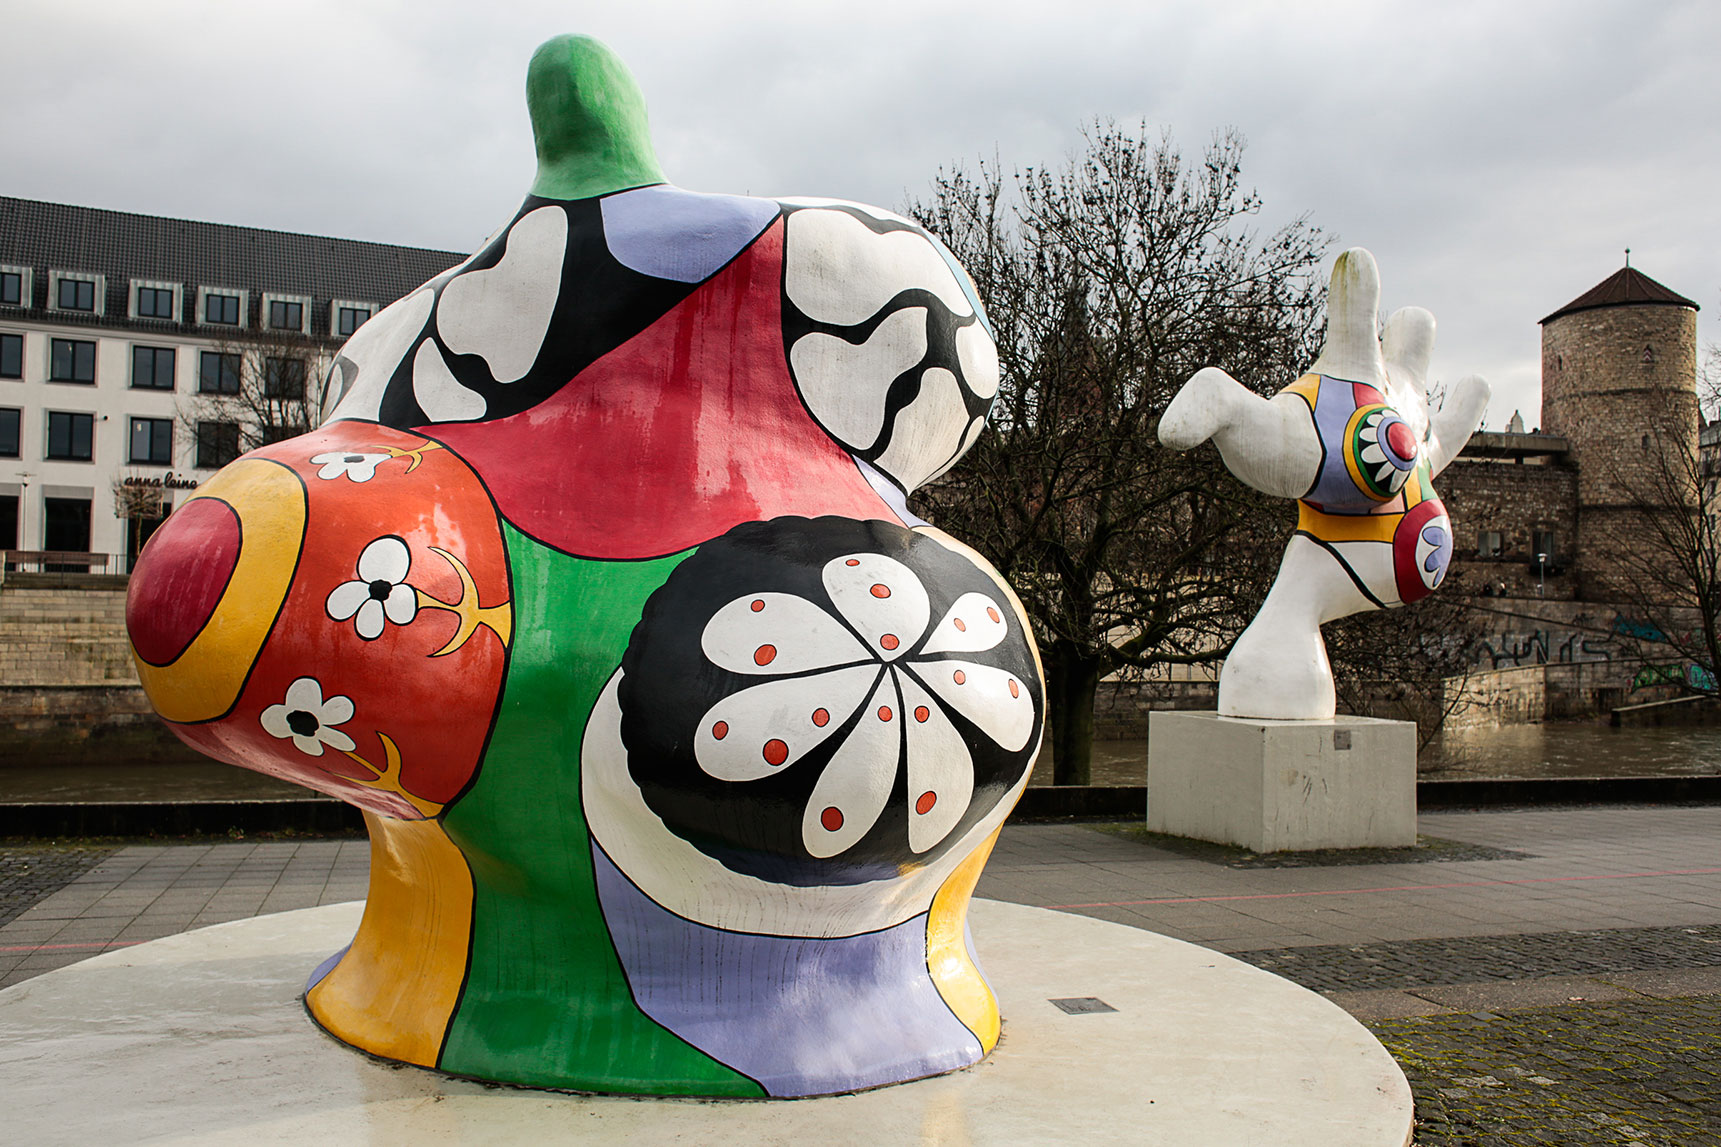 Modern art sculptures calls Nanas on the streets of Hanover